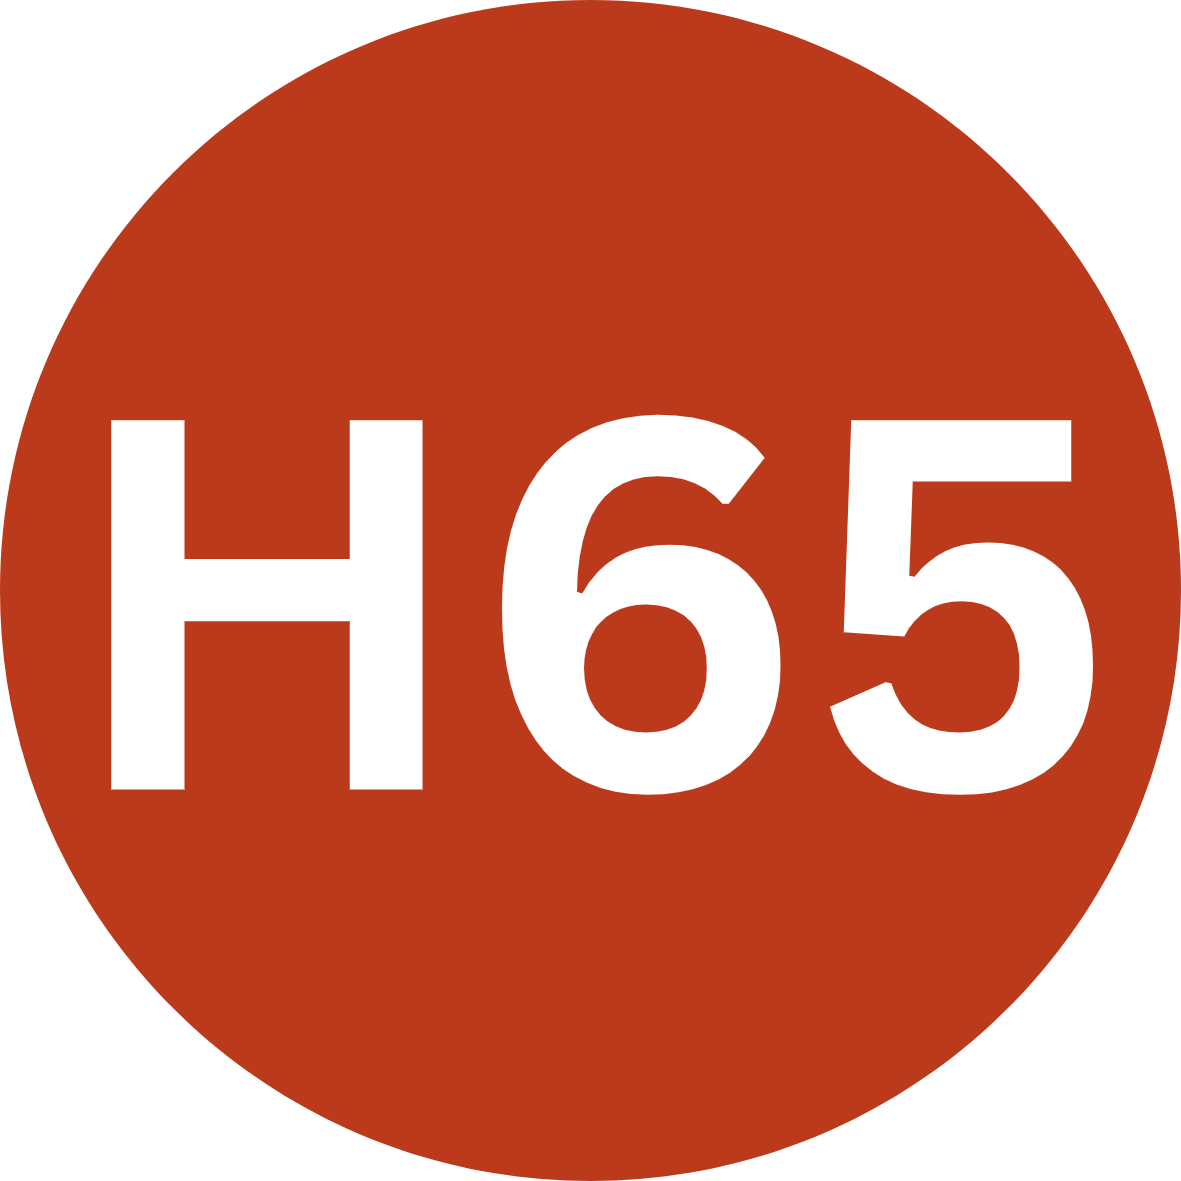 h40